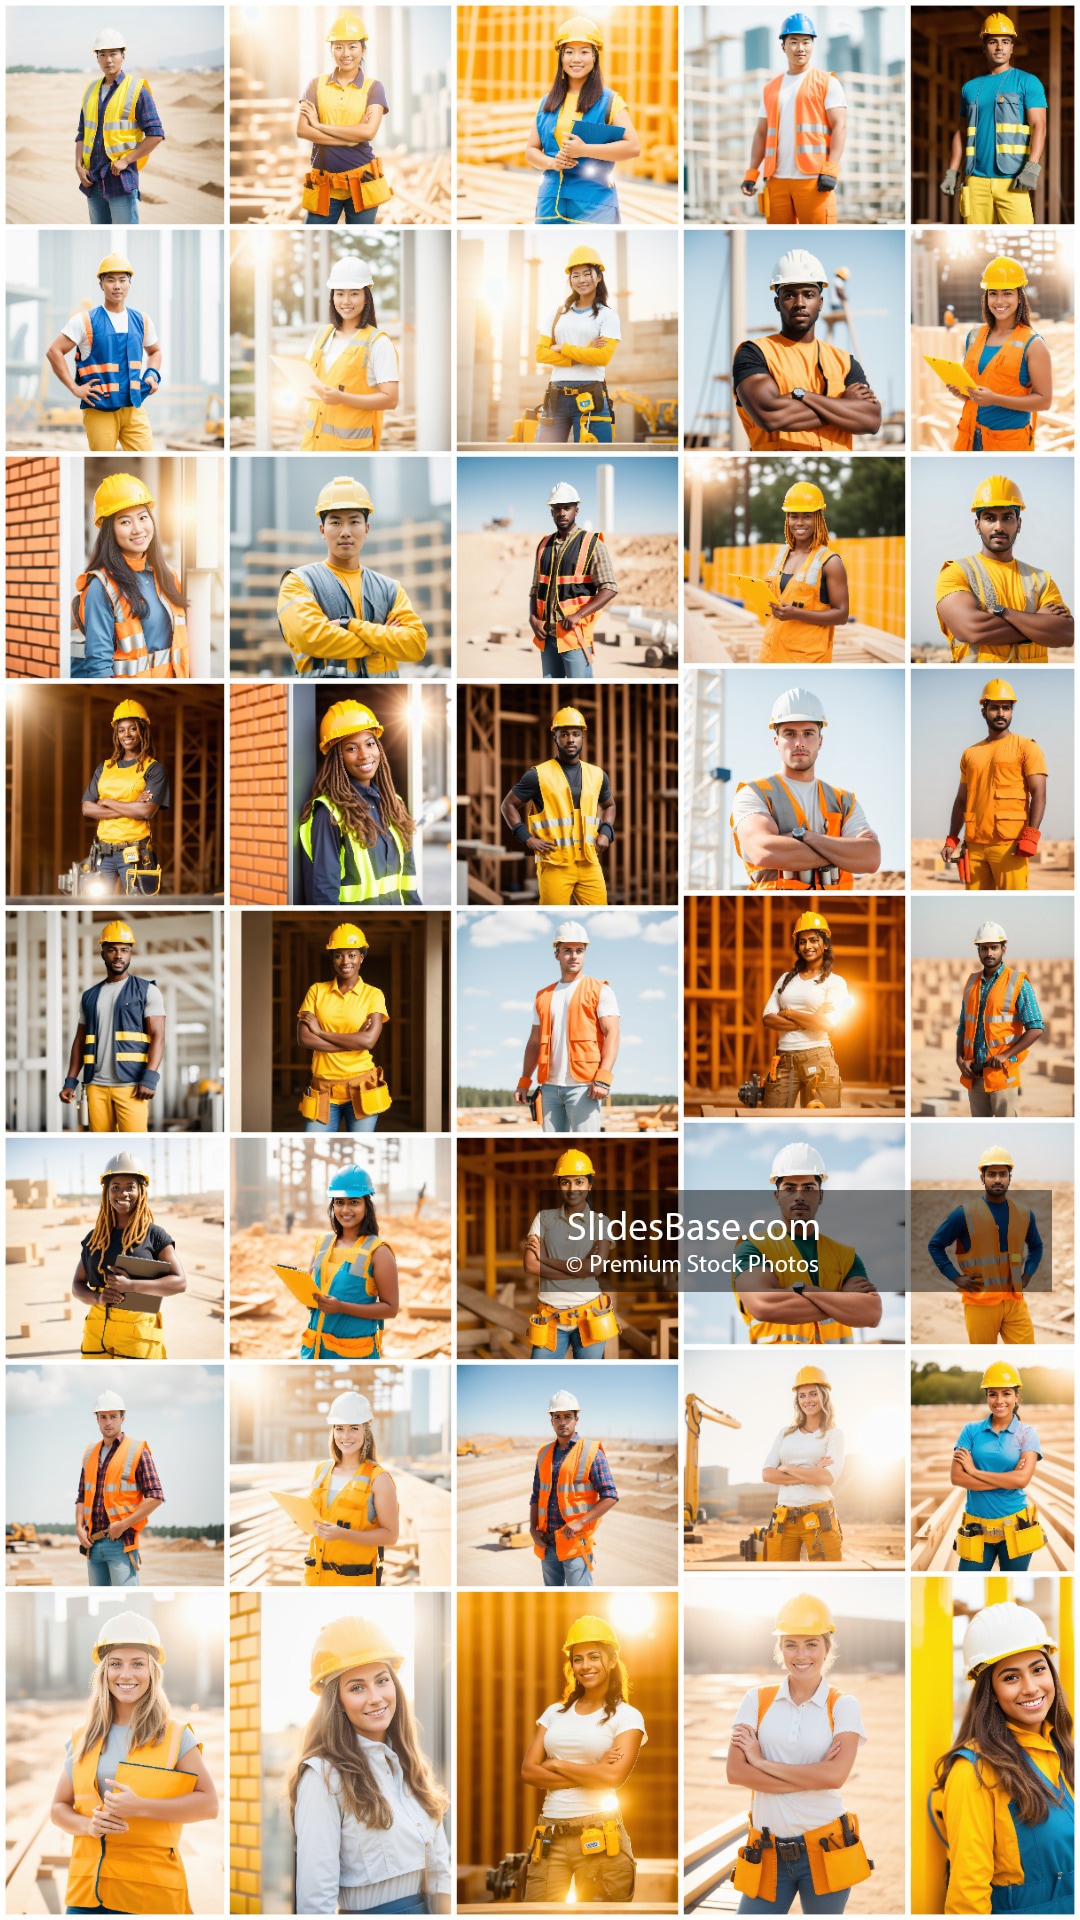 Construction worker stock photo bundle